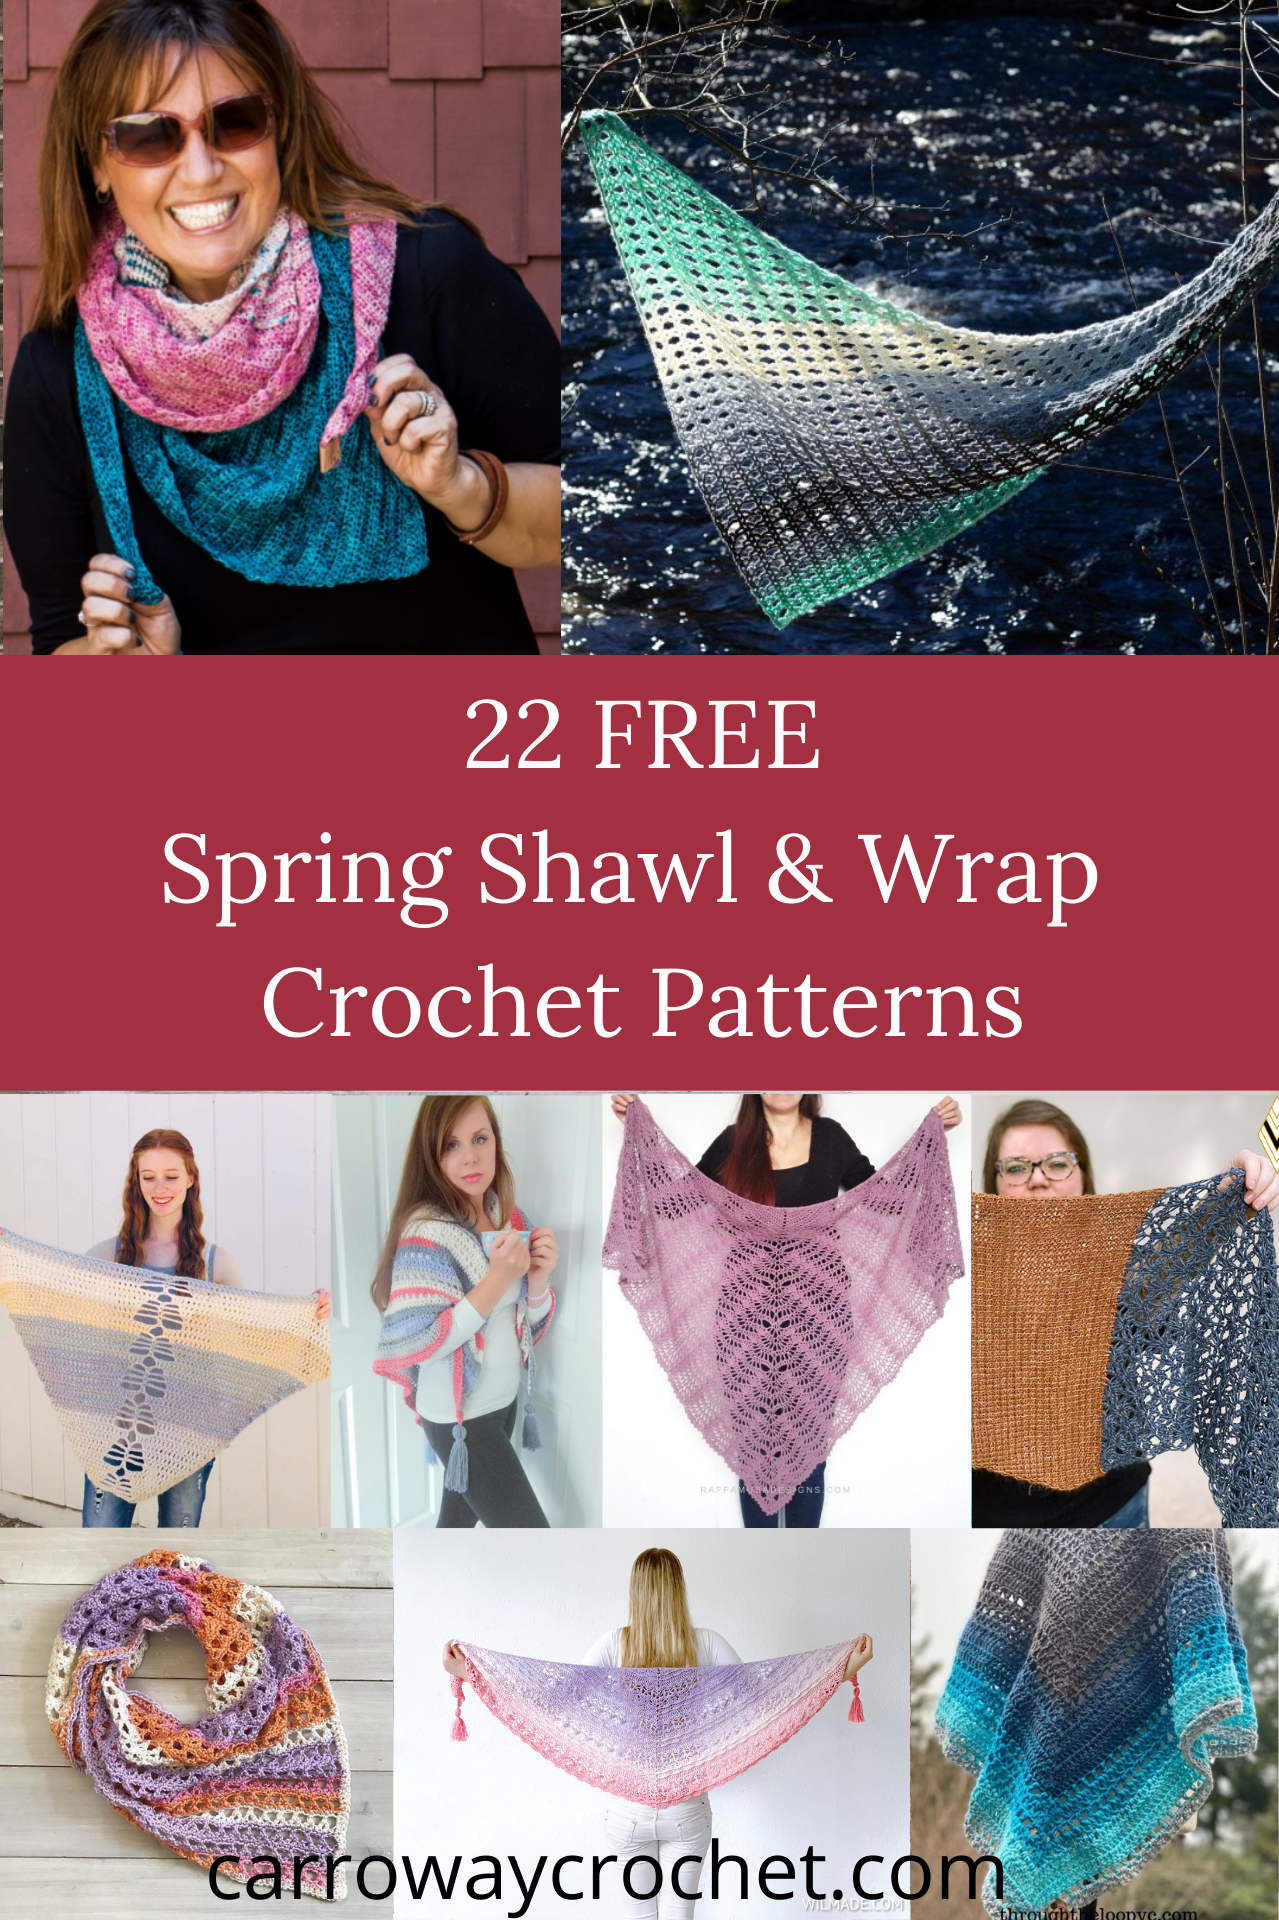 Spring Shawls and Wraps: 22 Free Crochet Patterns - Carroway Crochet